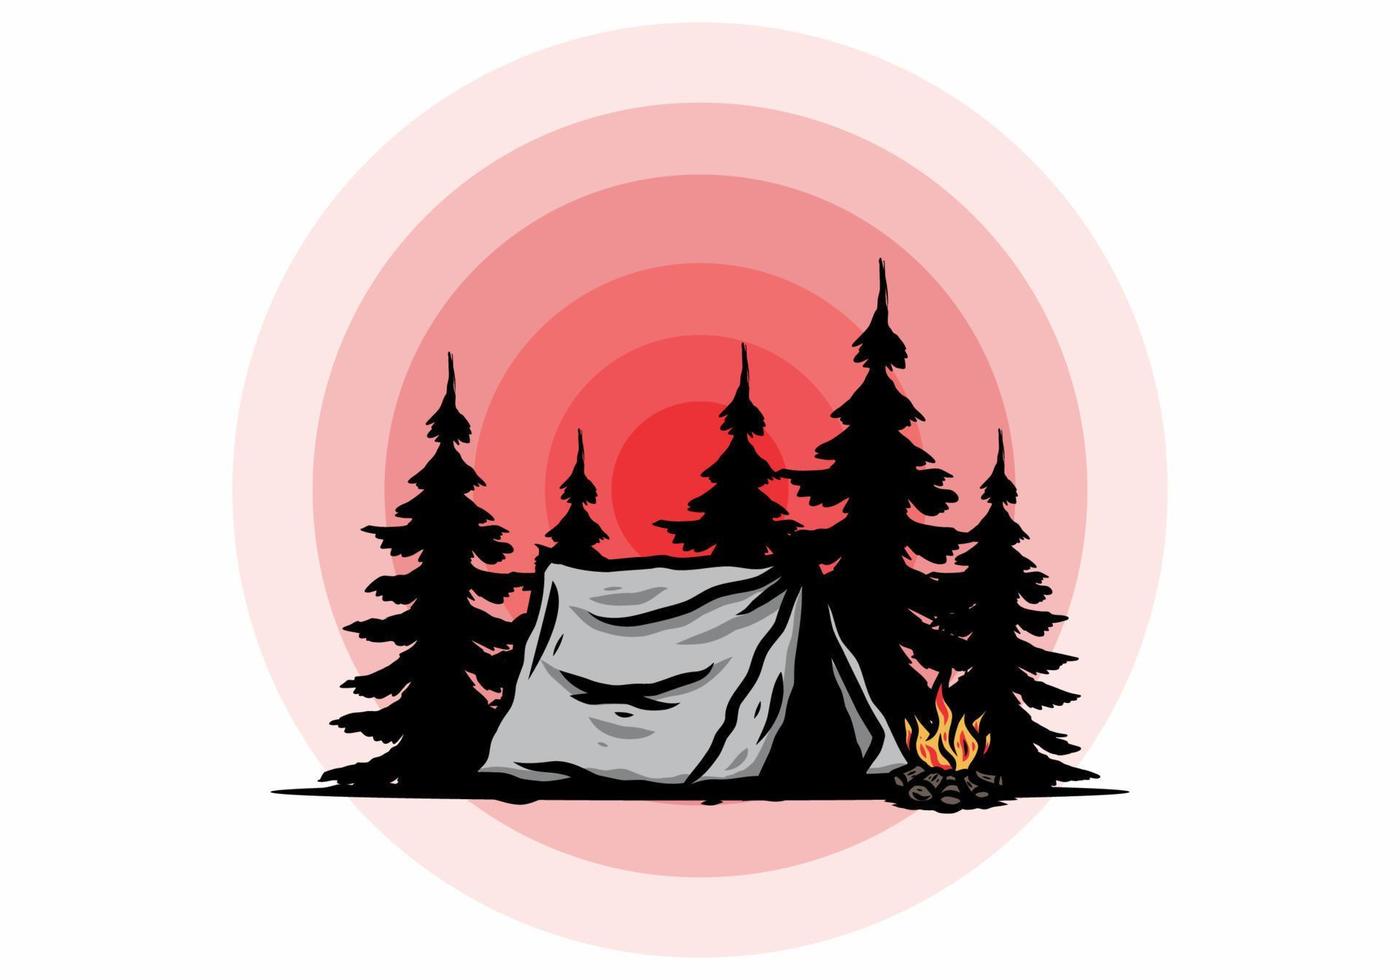 Midnight camping with bonfire illustration vector